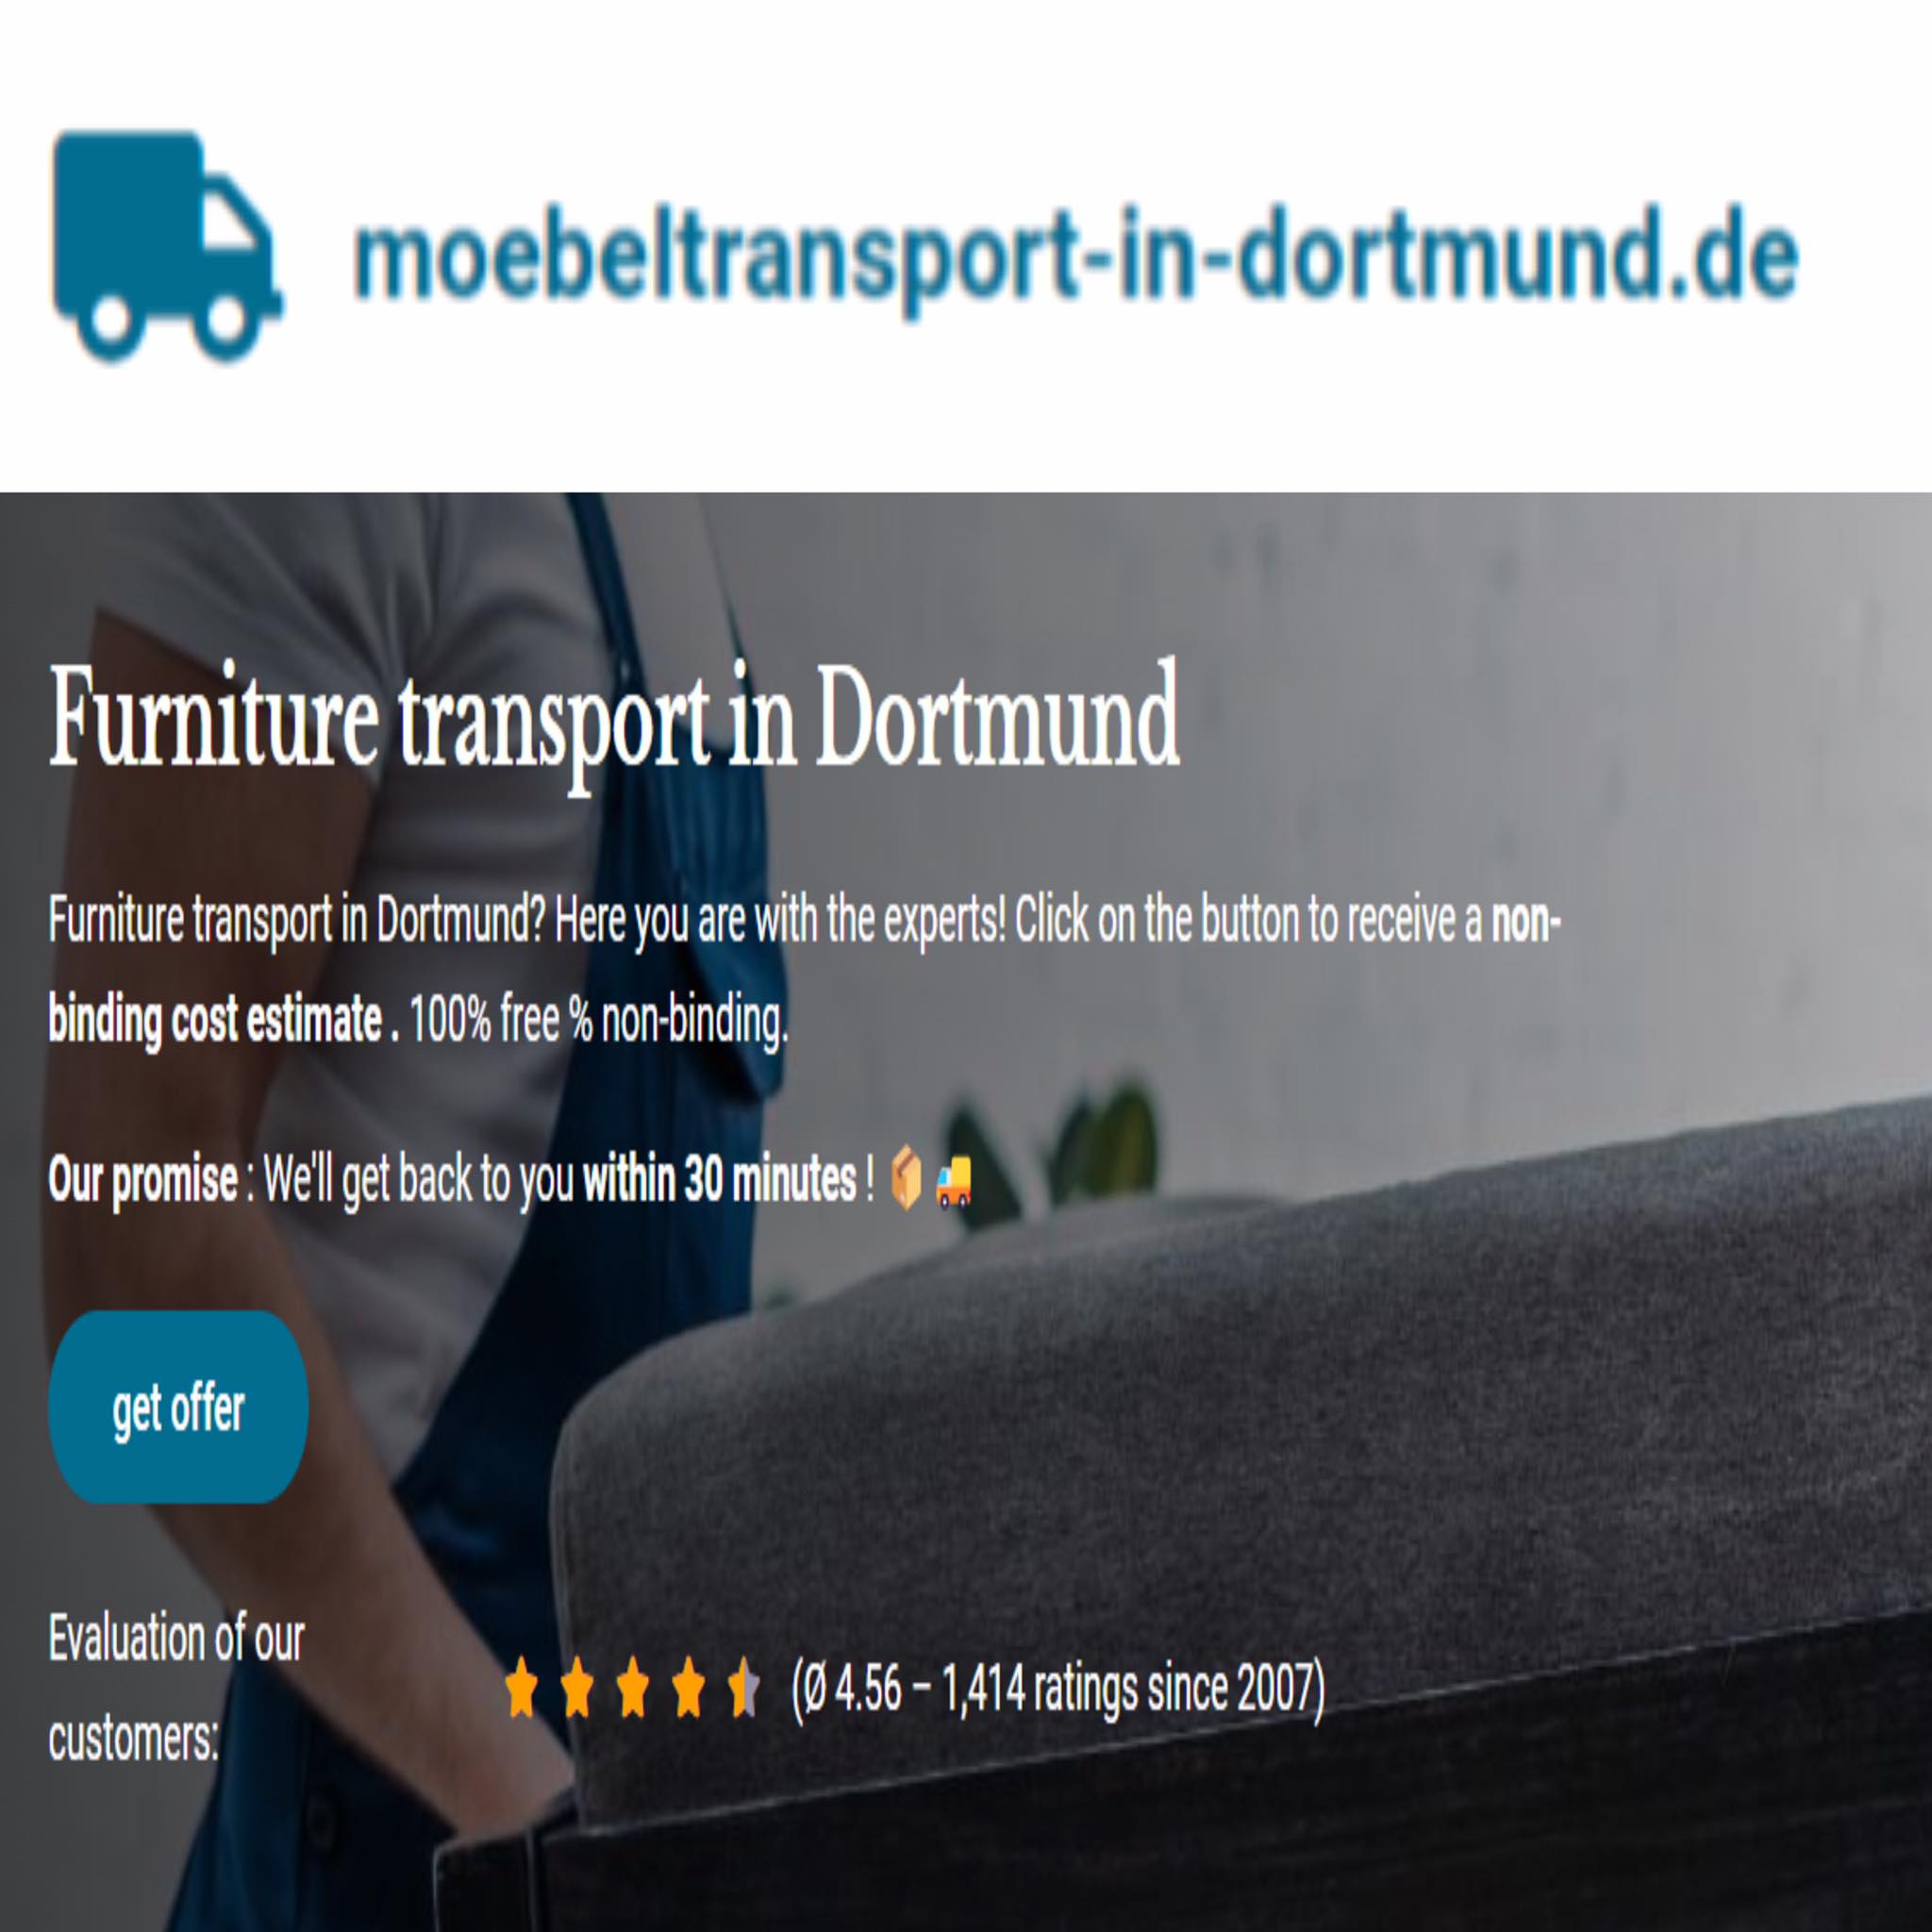 moebeltransport-in-dortmund.de in Dortmund